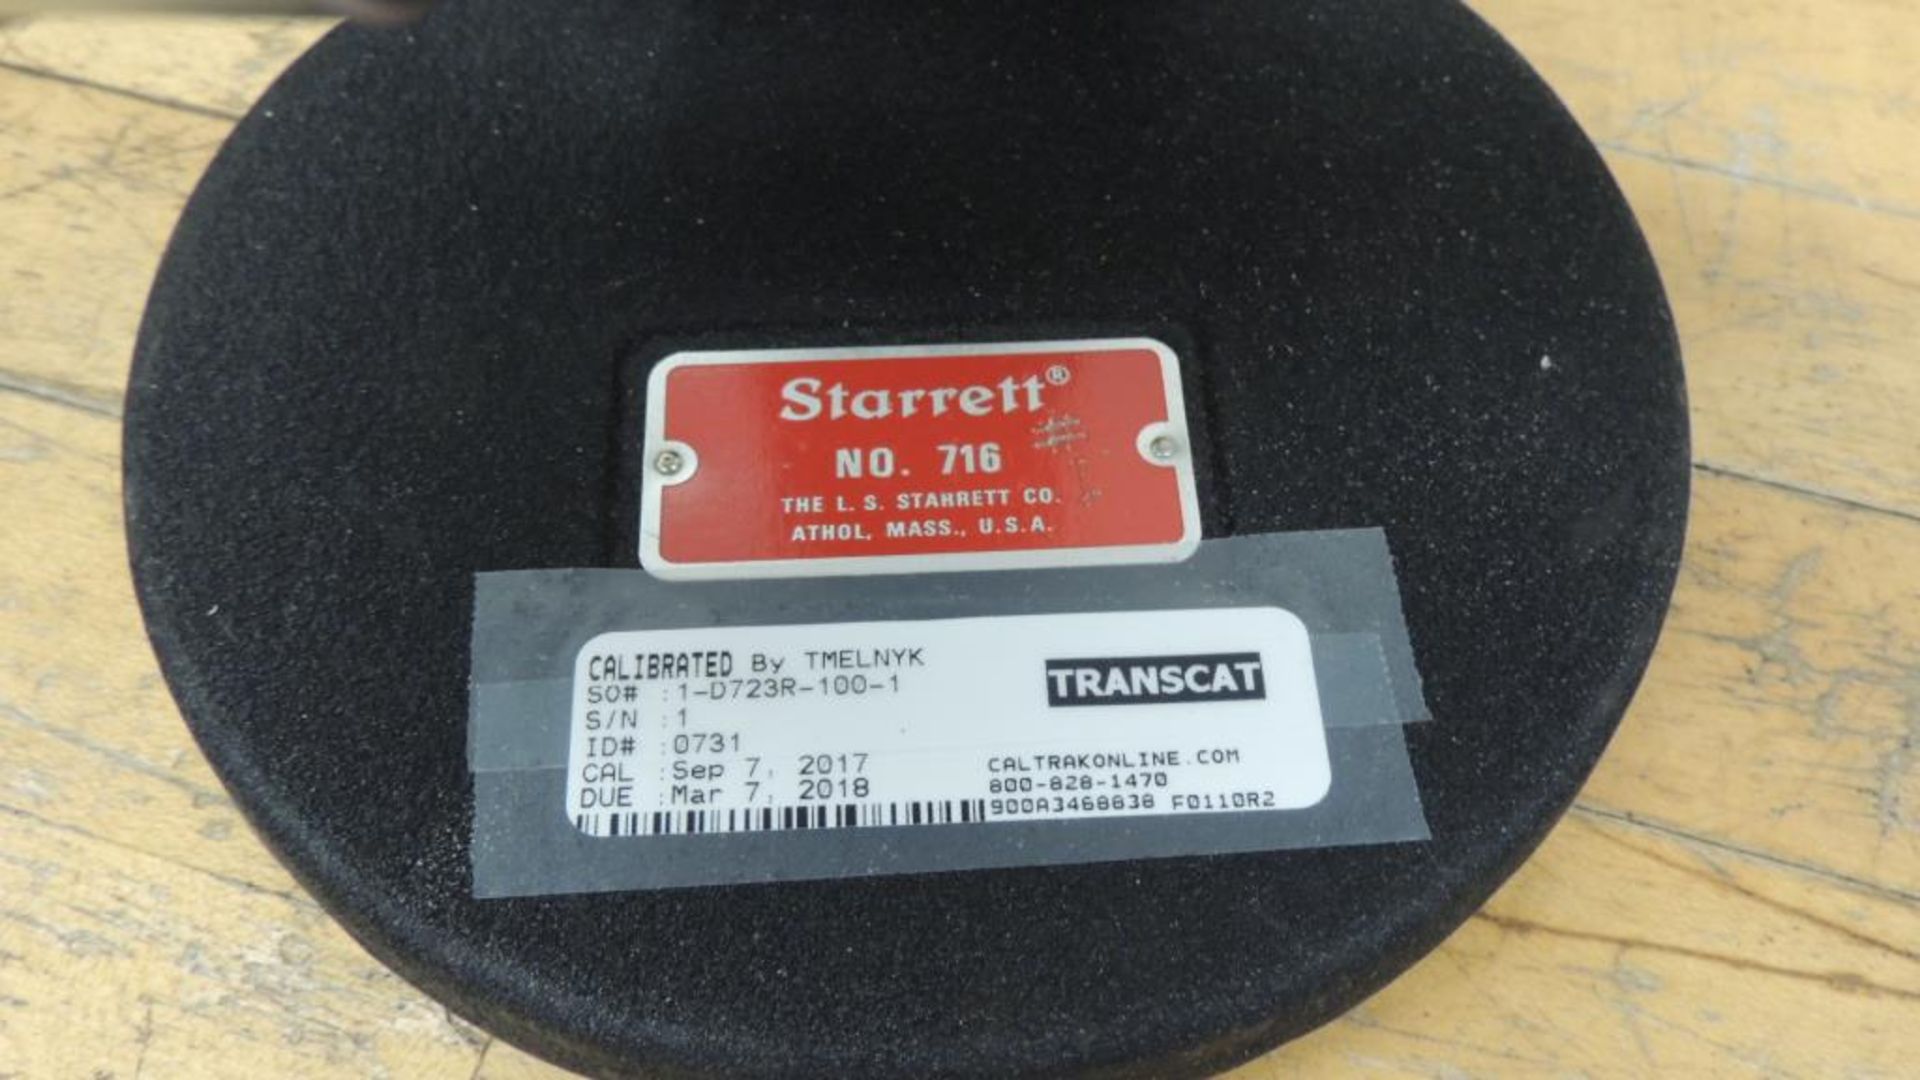 Starrett 716 Dial Indicator Tester; Dial Indicator Tester - Metrology Calibration Micrometer Head. - Image 3 of 6